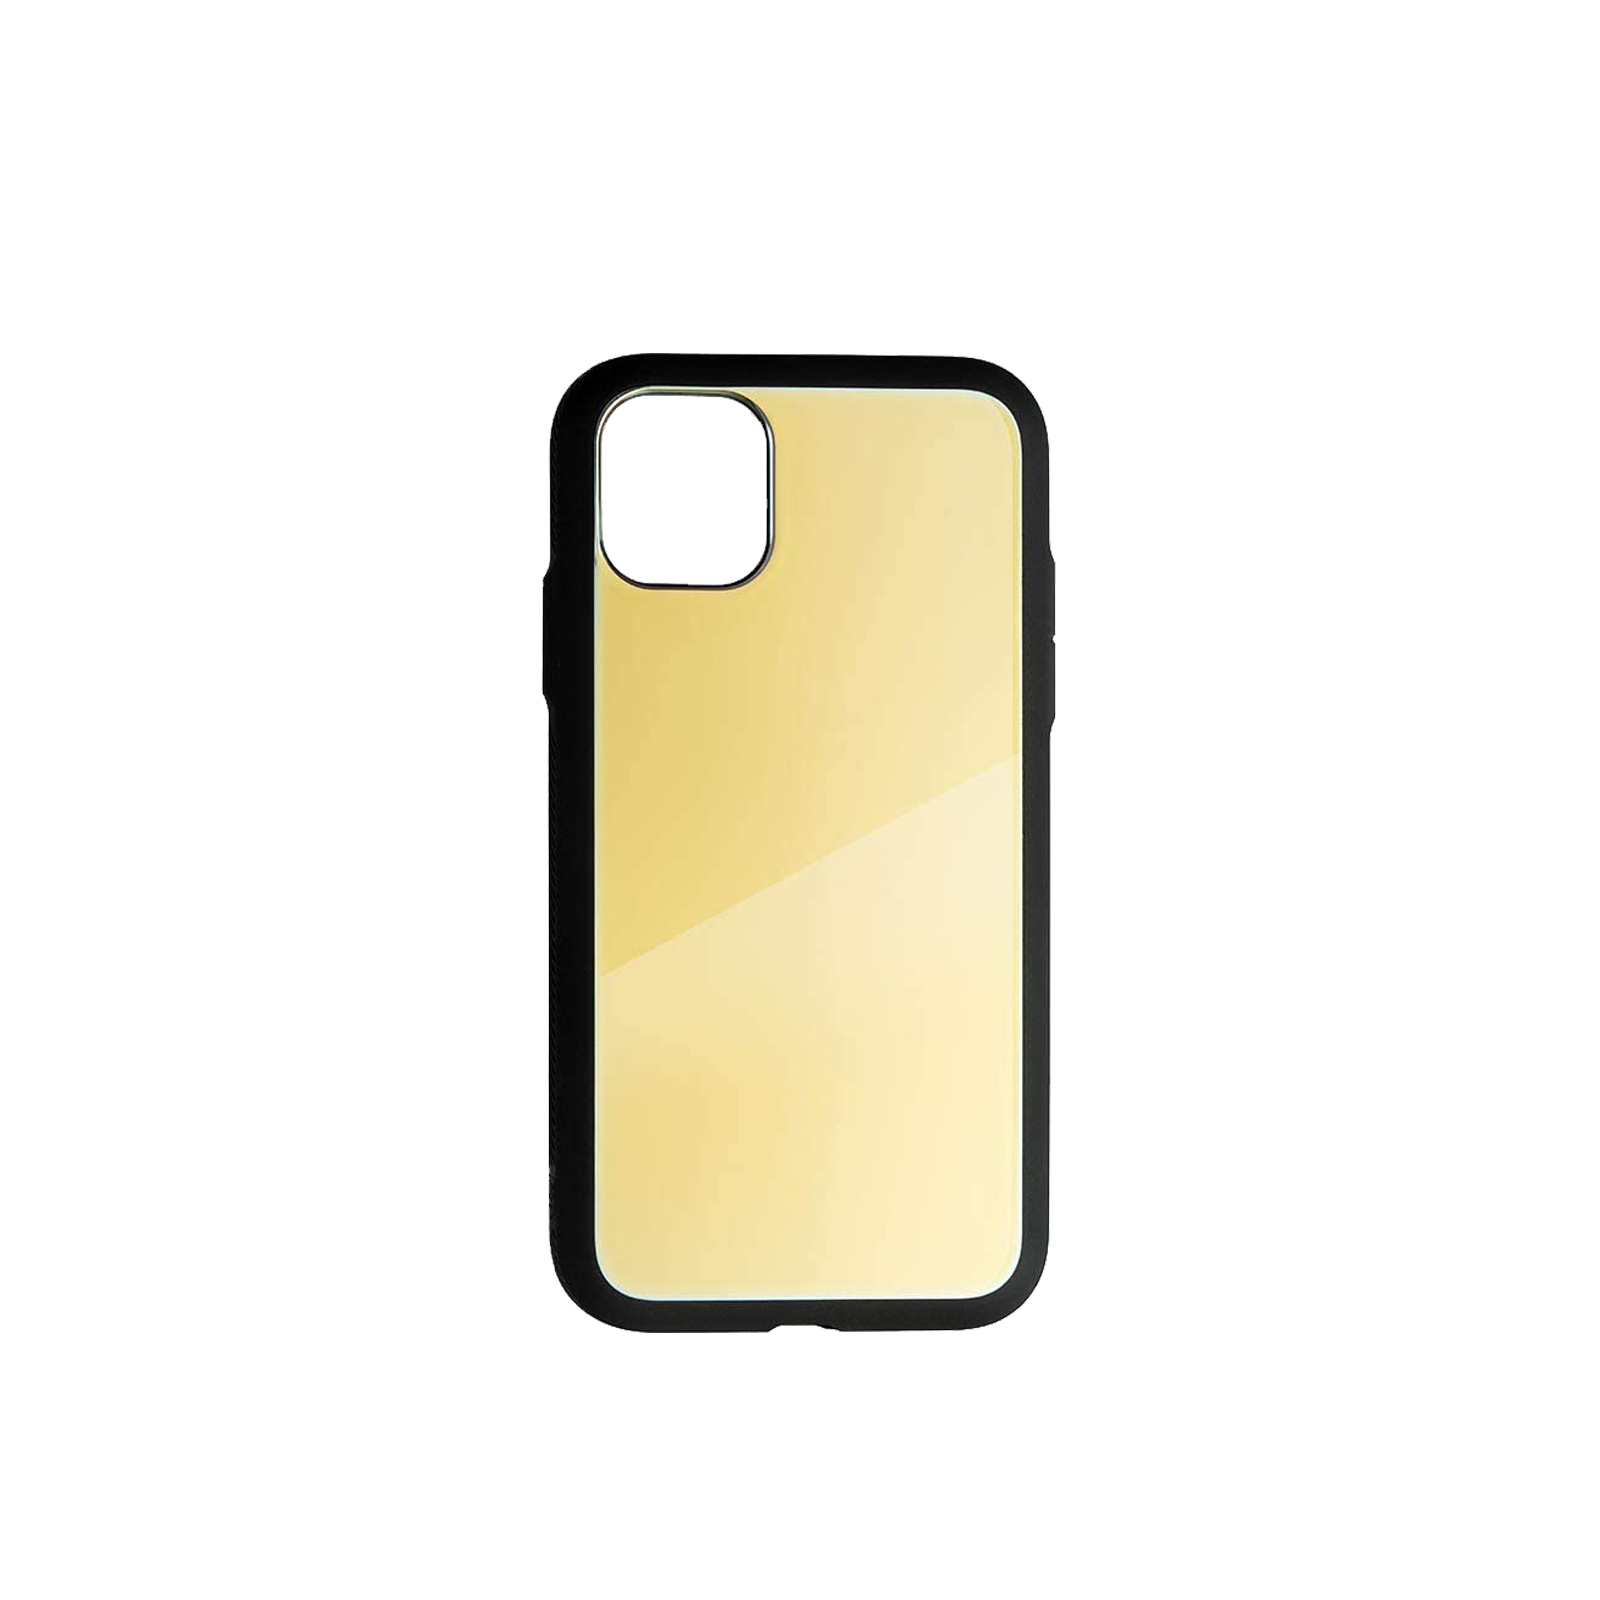 ParadigmGrip iPhone 11Pro Max Black / Yellow Case Brand New